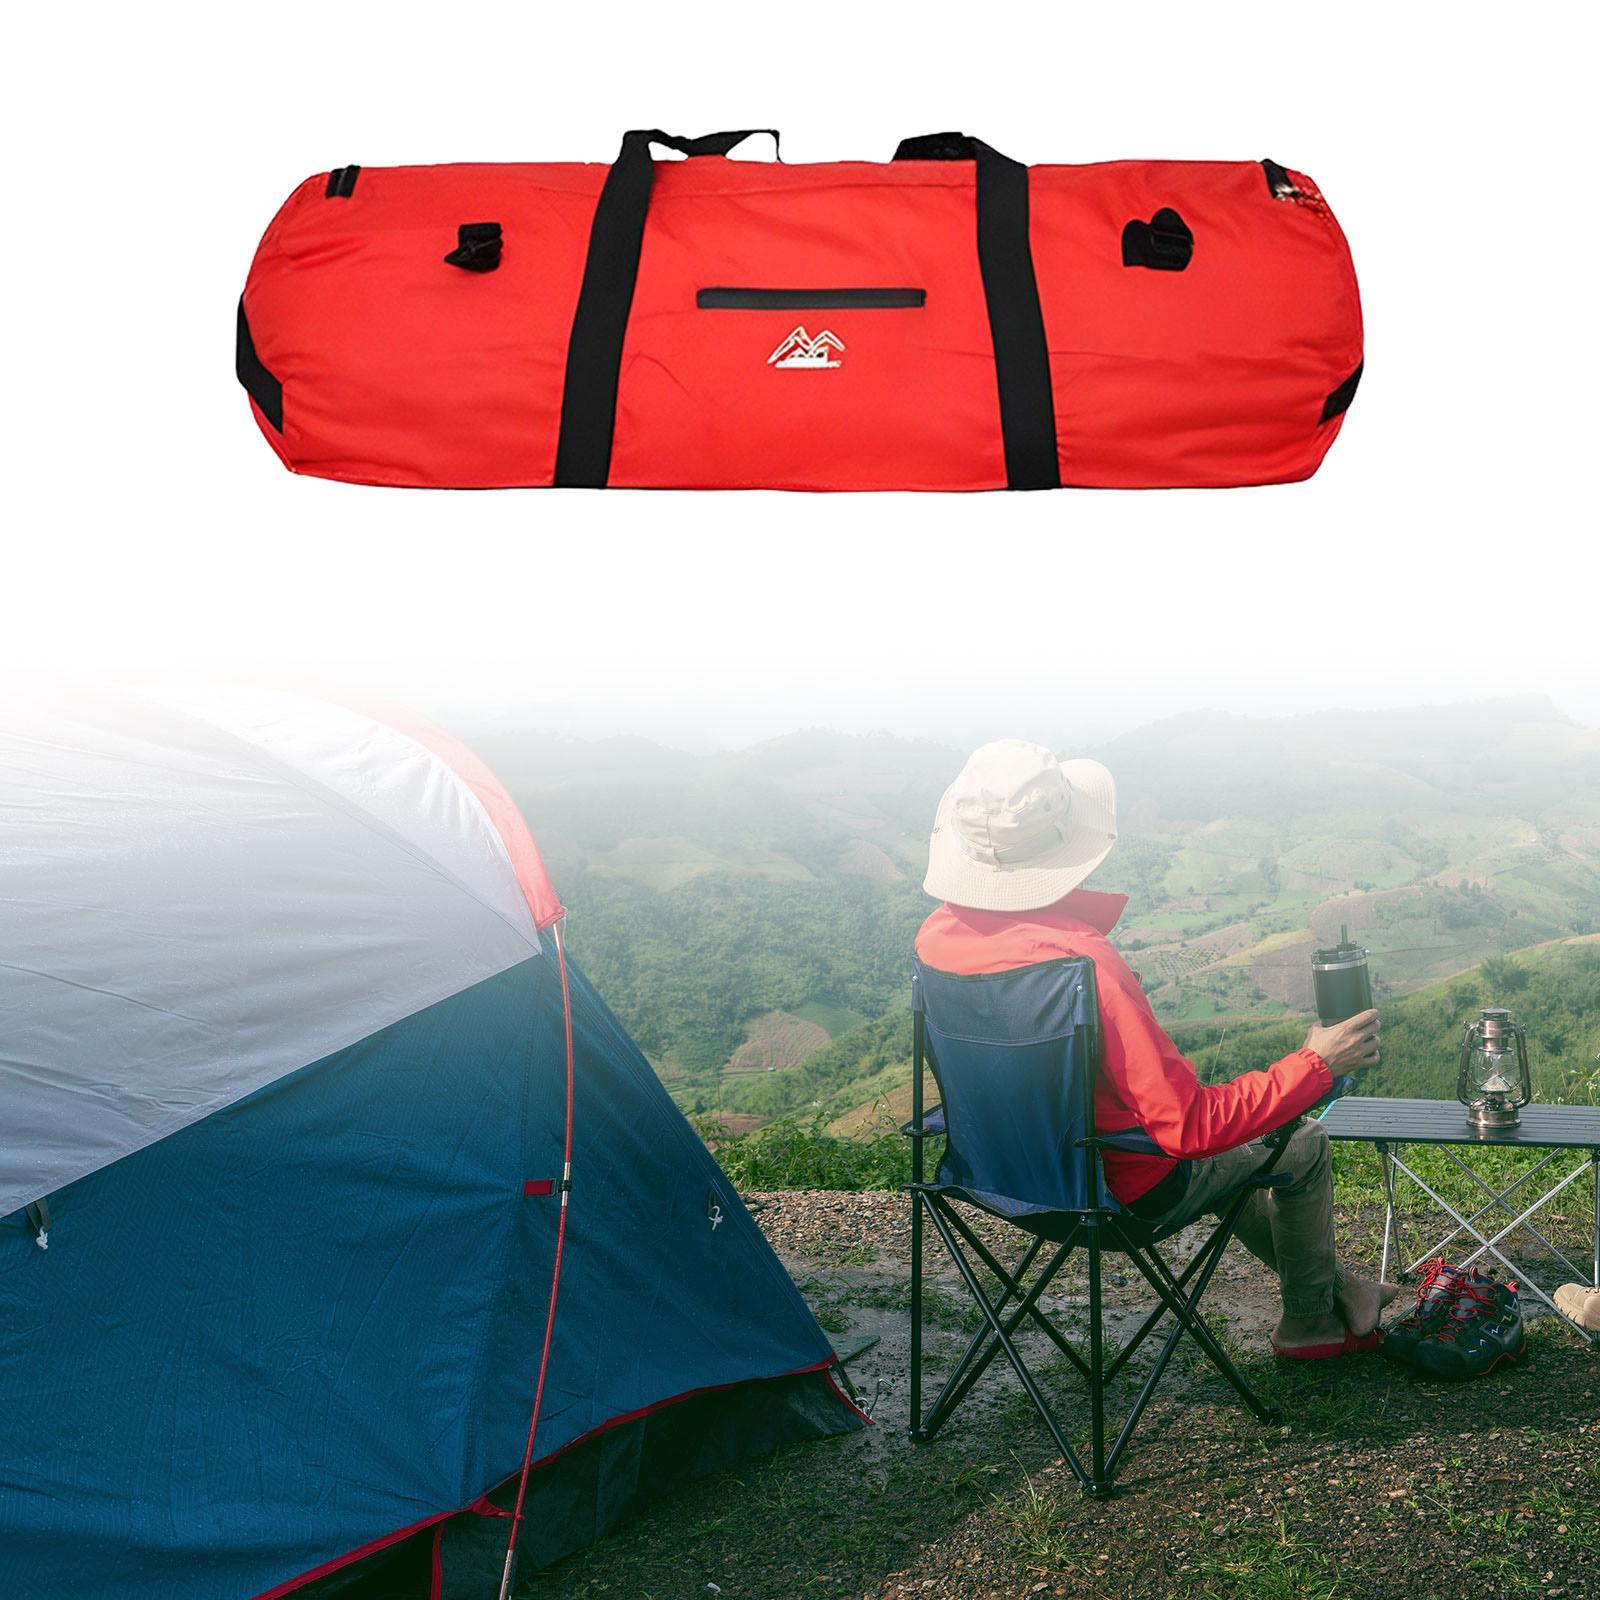 Foldable Camping Storage Overnight Bag Large Capacity Travel Duffel Tote Bag